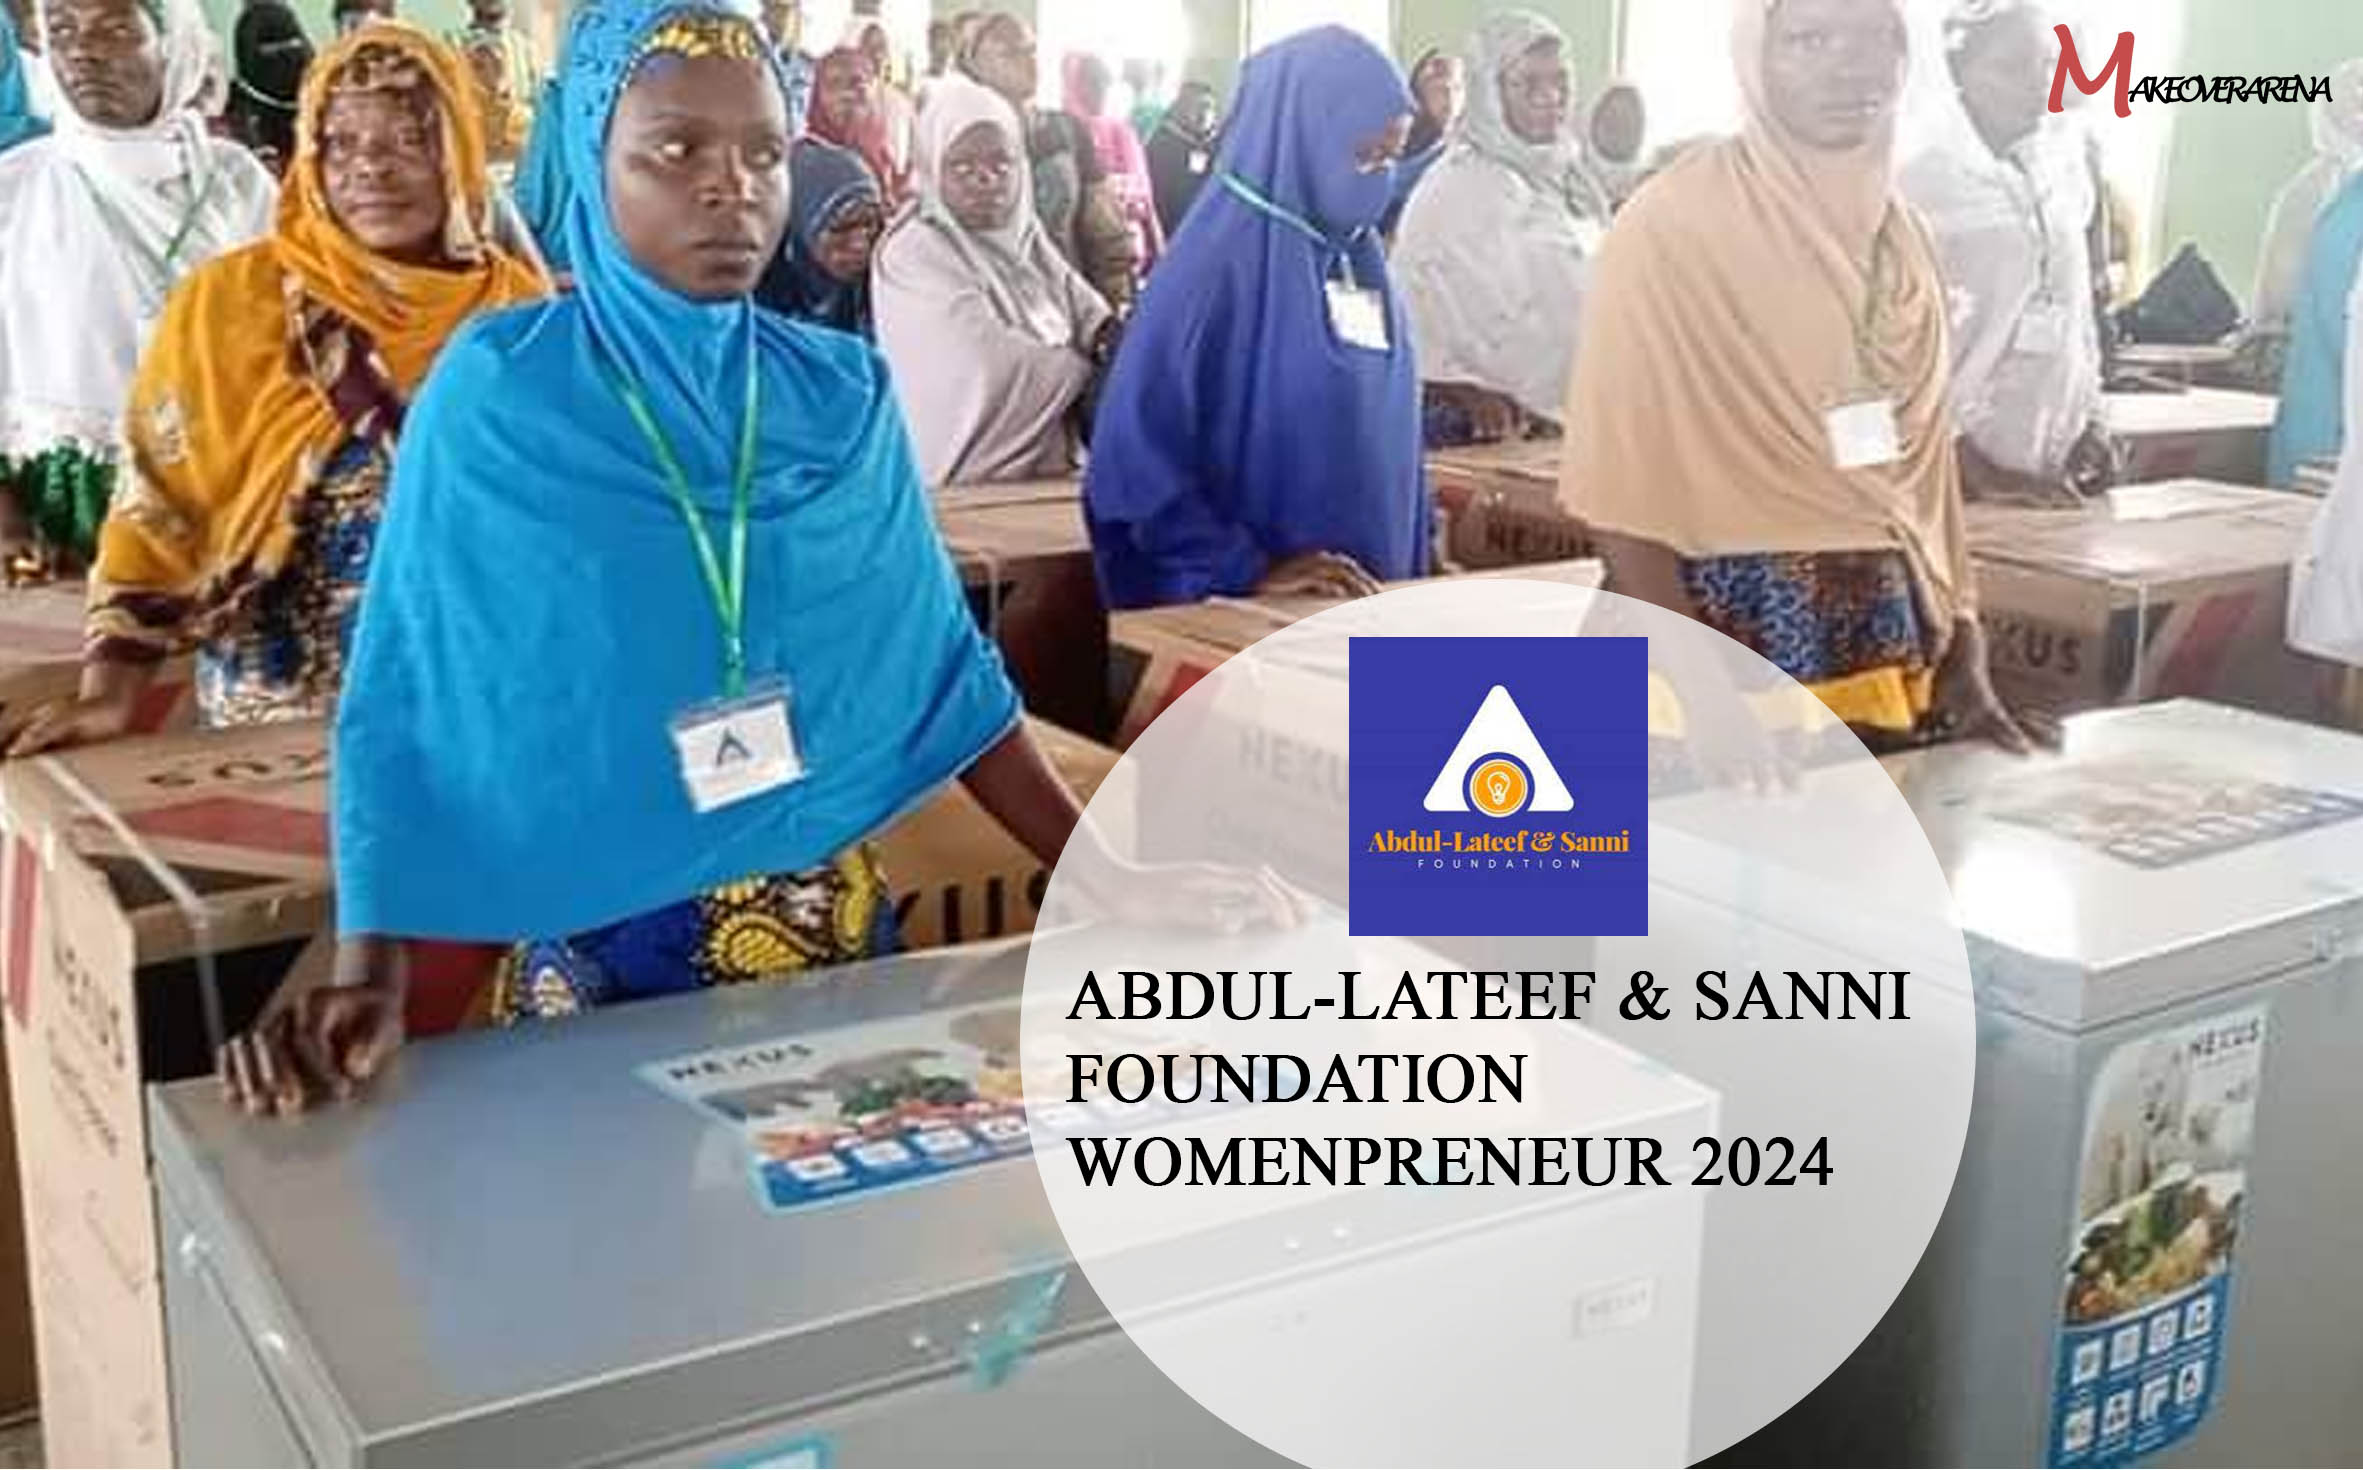 Abdul-Lateef & Sanni Foundation Womenpreneur 2024 